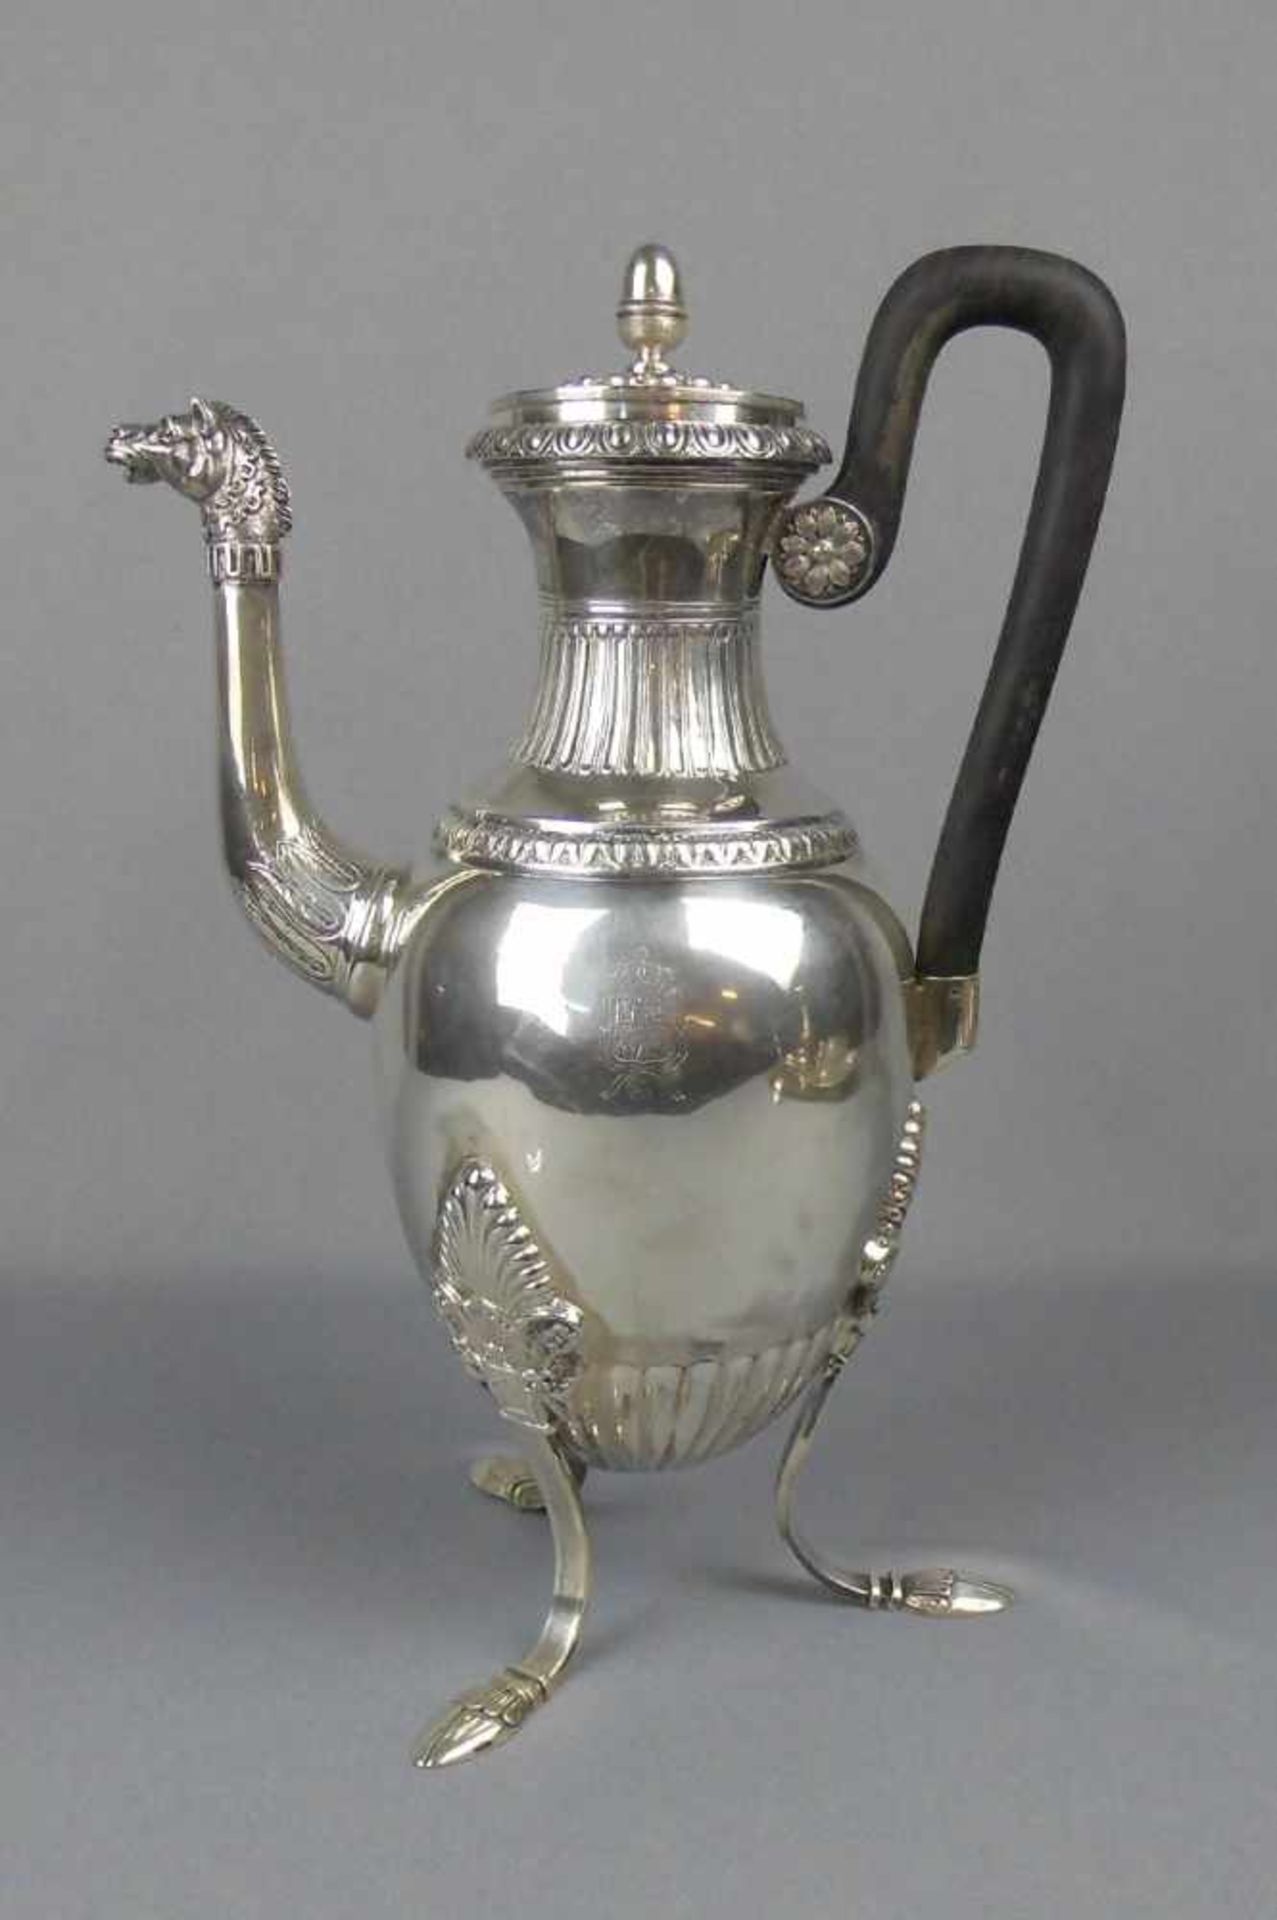 PRÄCHTIGE EMPIRE KAFFEE - KANNE AUS ADELSBESITZ / silver empire coffee pot from nobility estates,